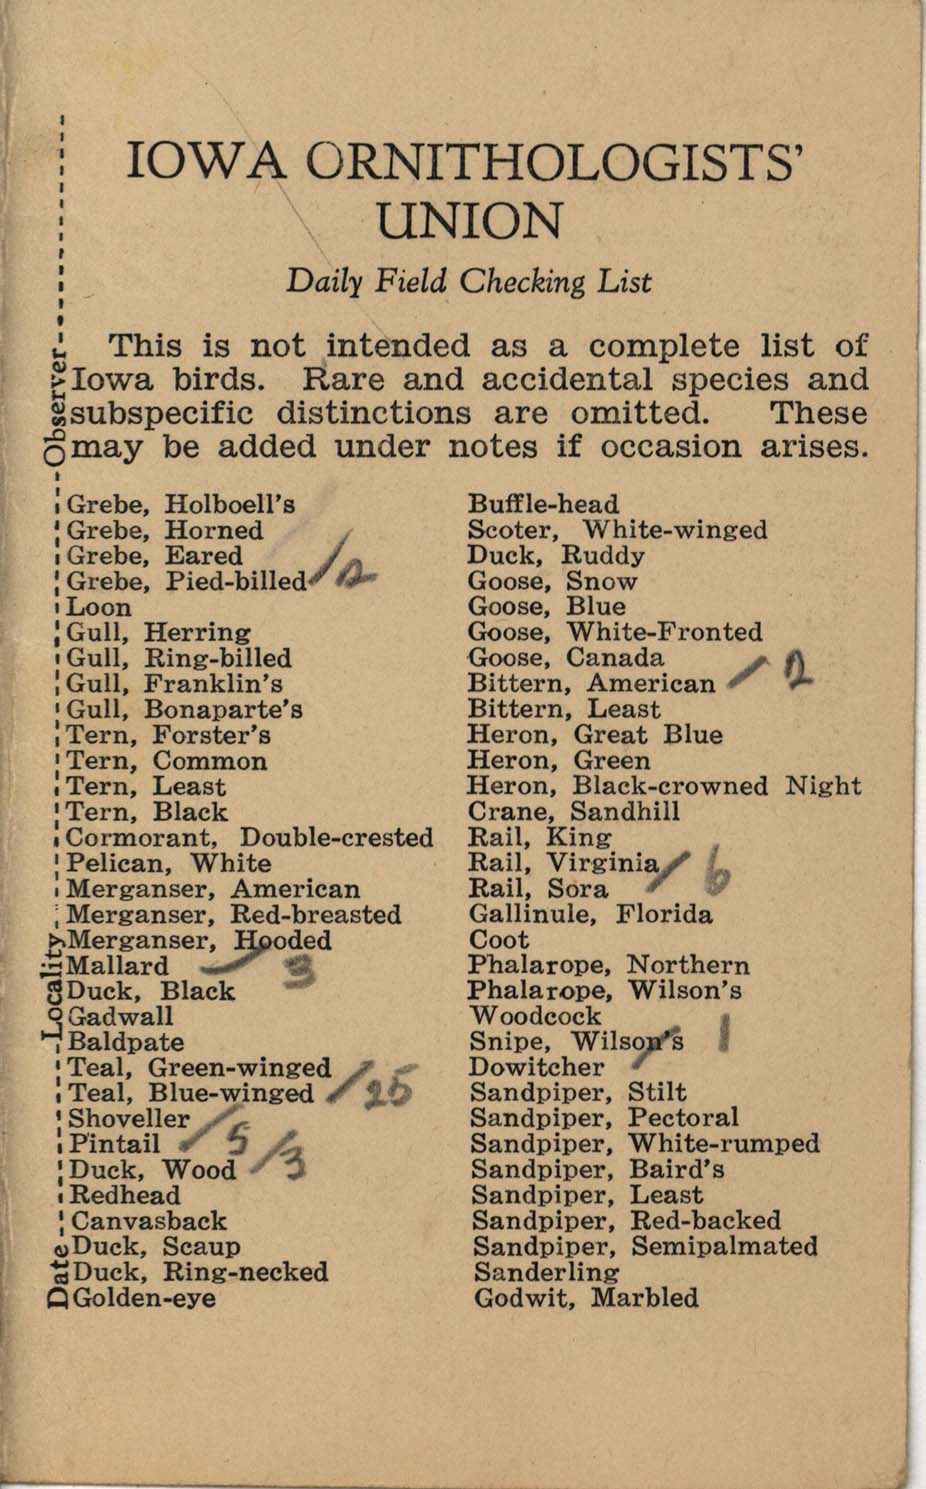 Daily field checking list, Philip DuMont, September 20, 1931